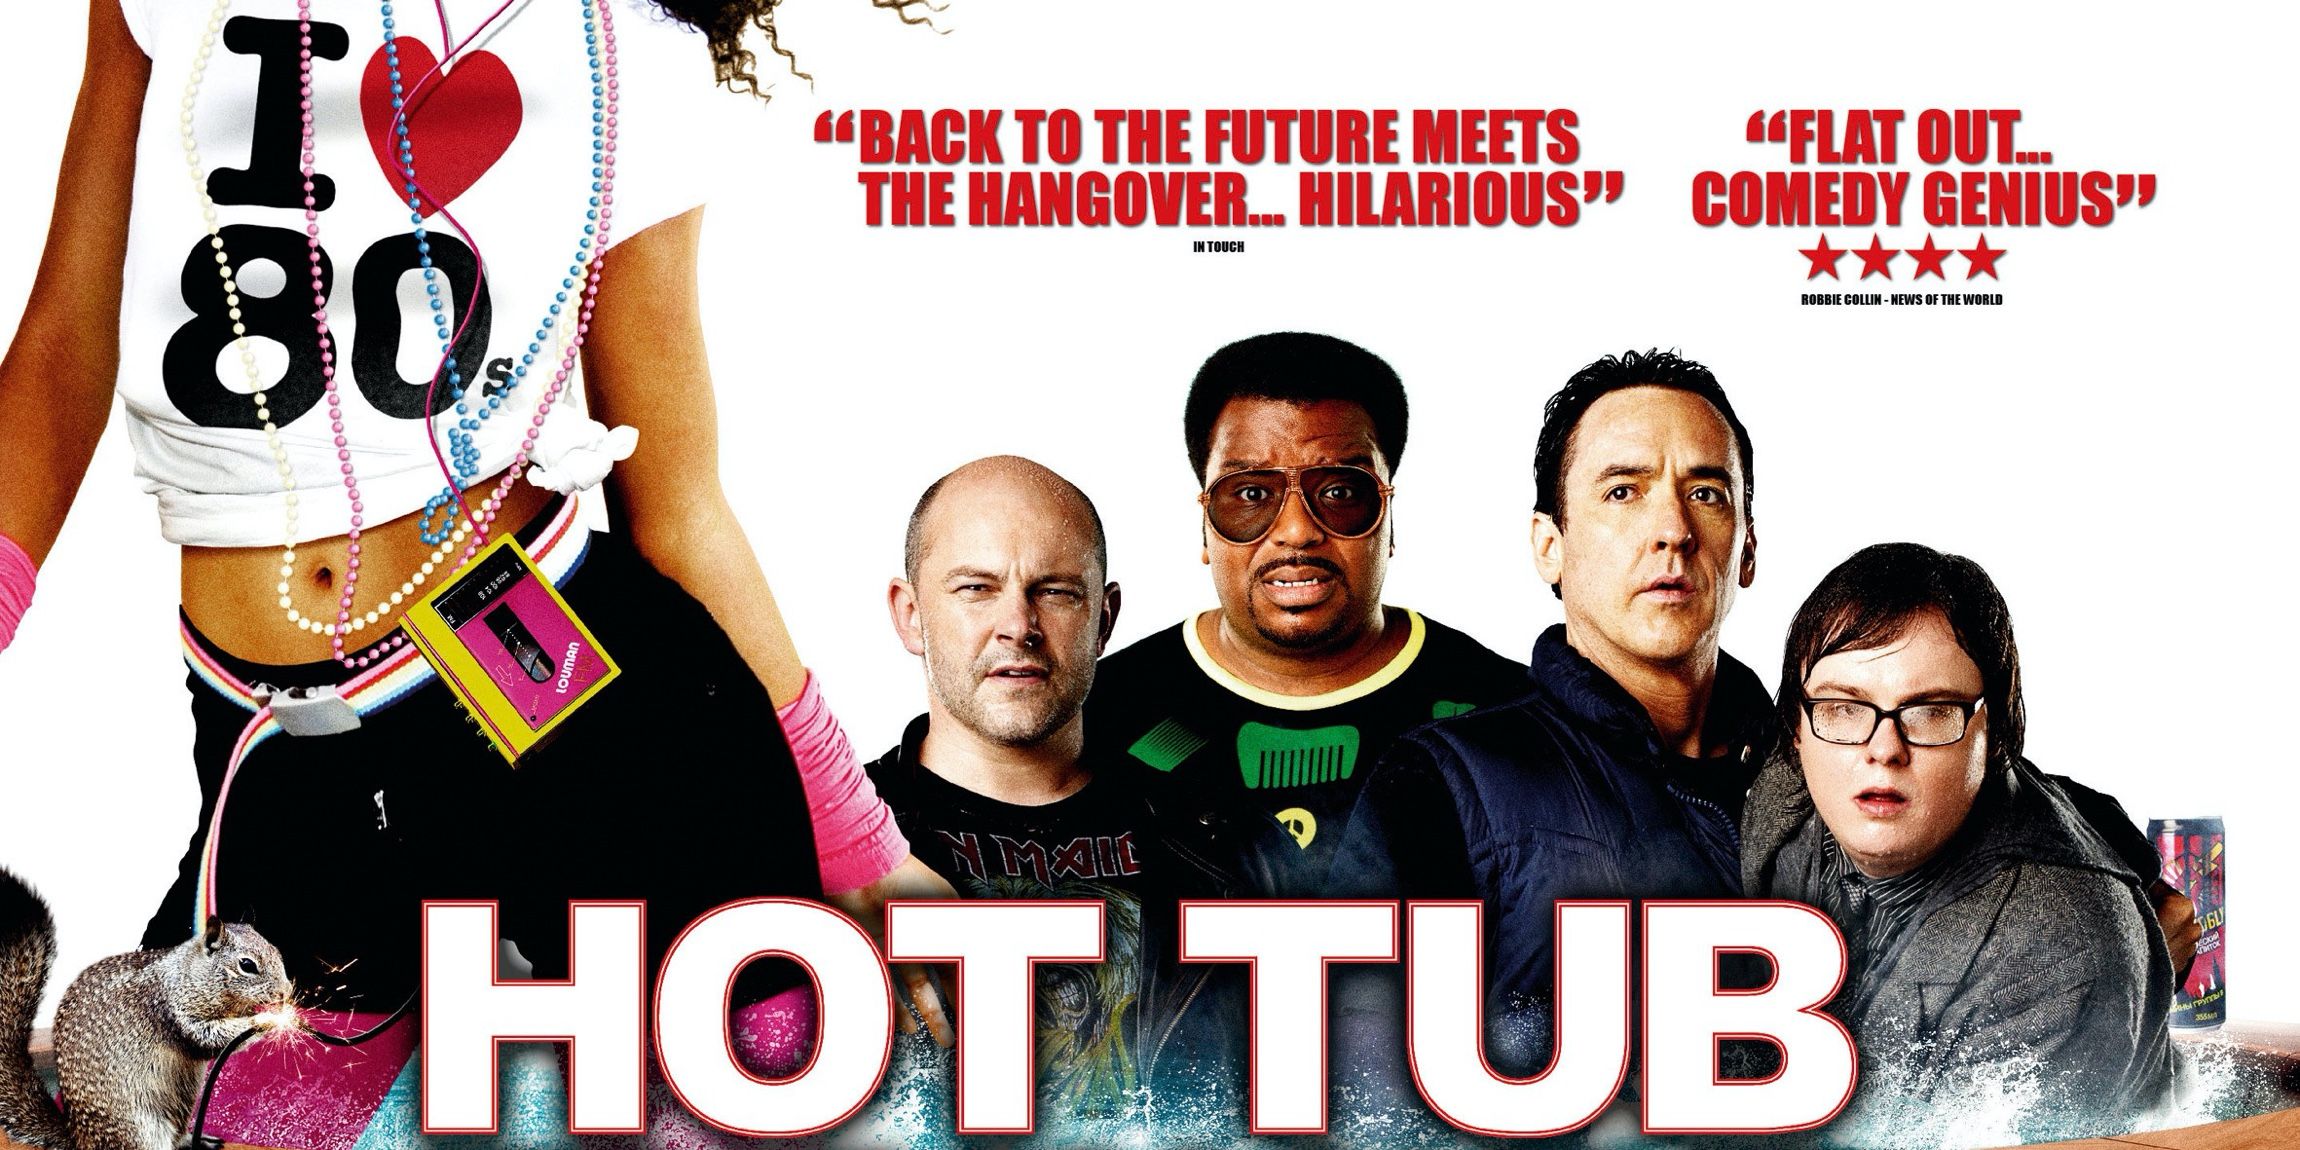 hot tub time machine movie review